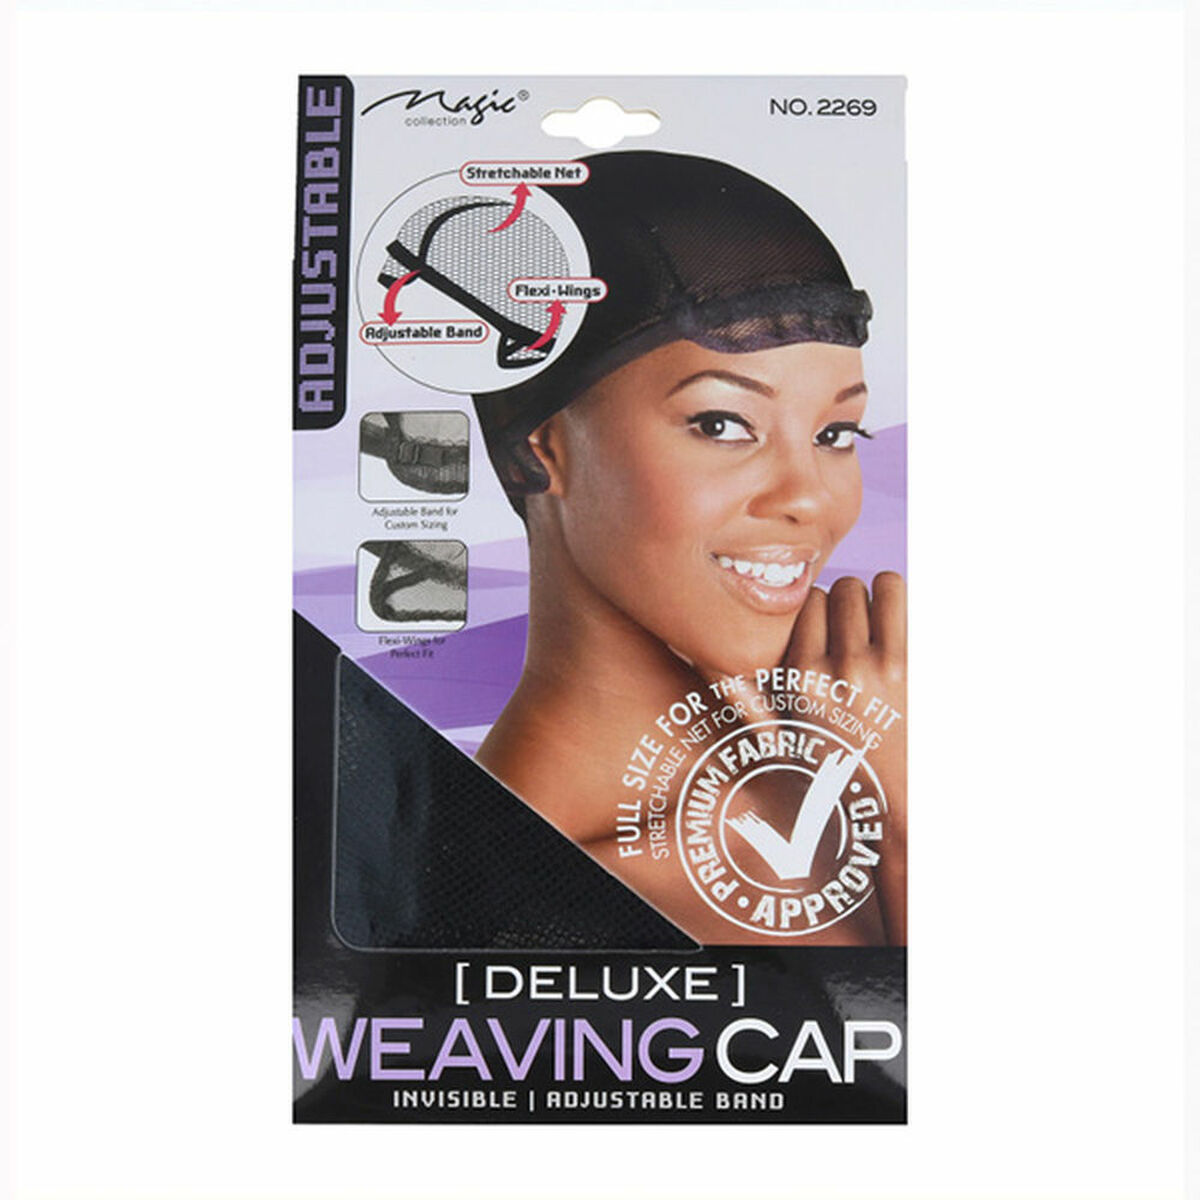 Кепка Deluxe Weaving Cap Invisible